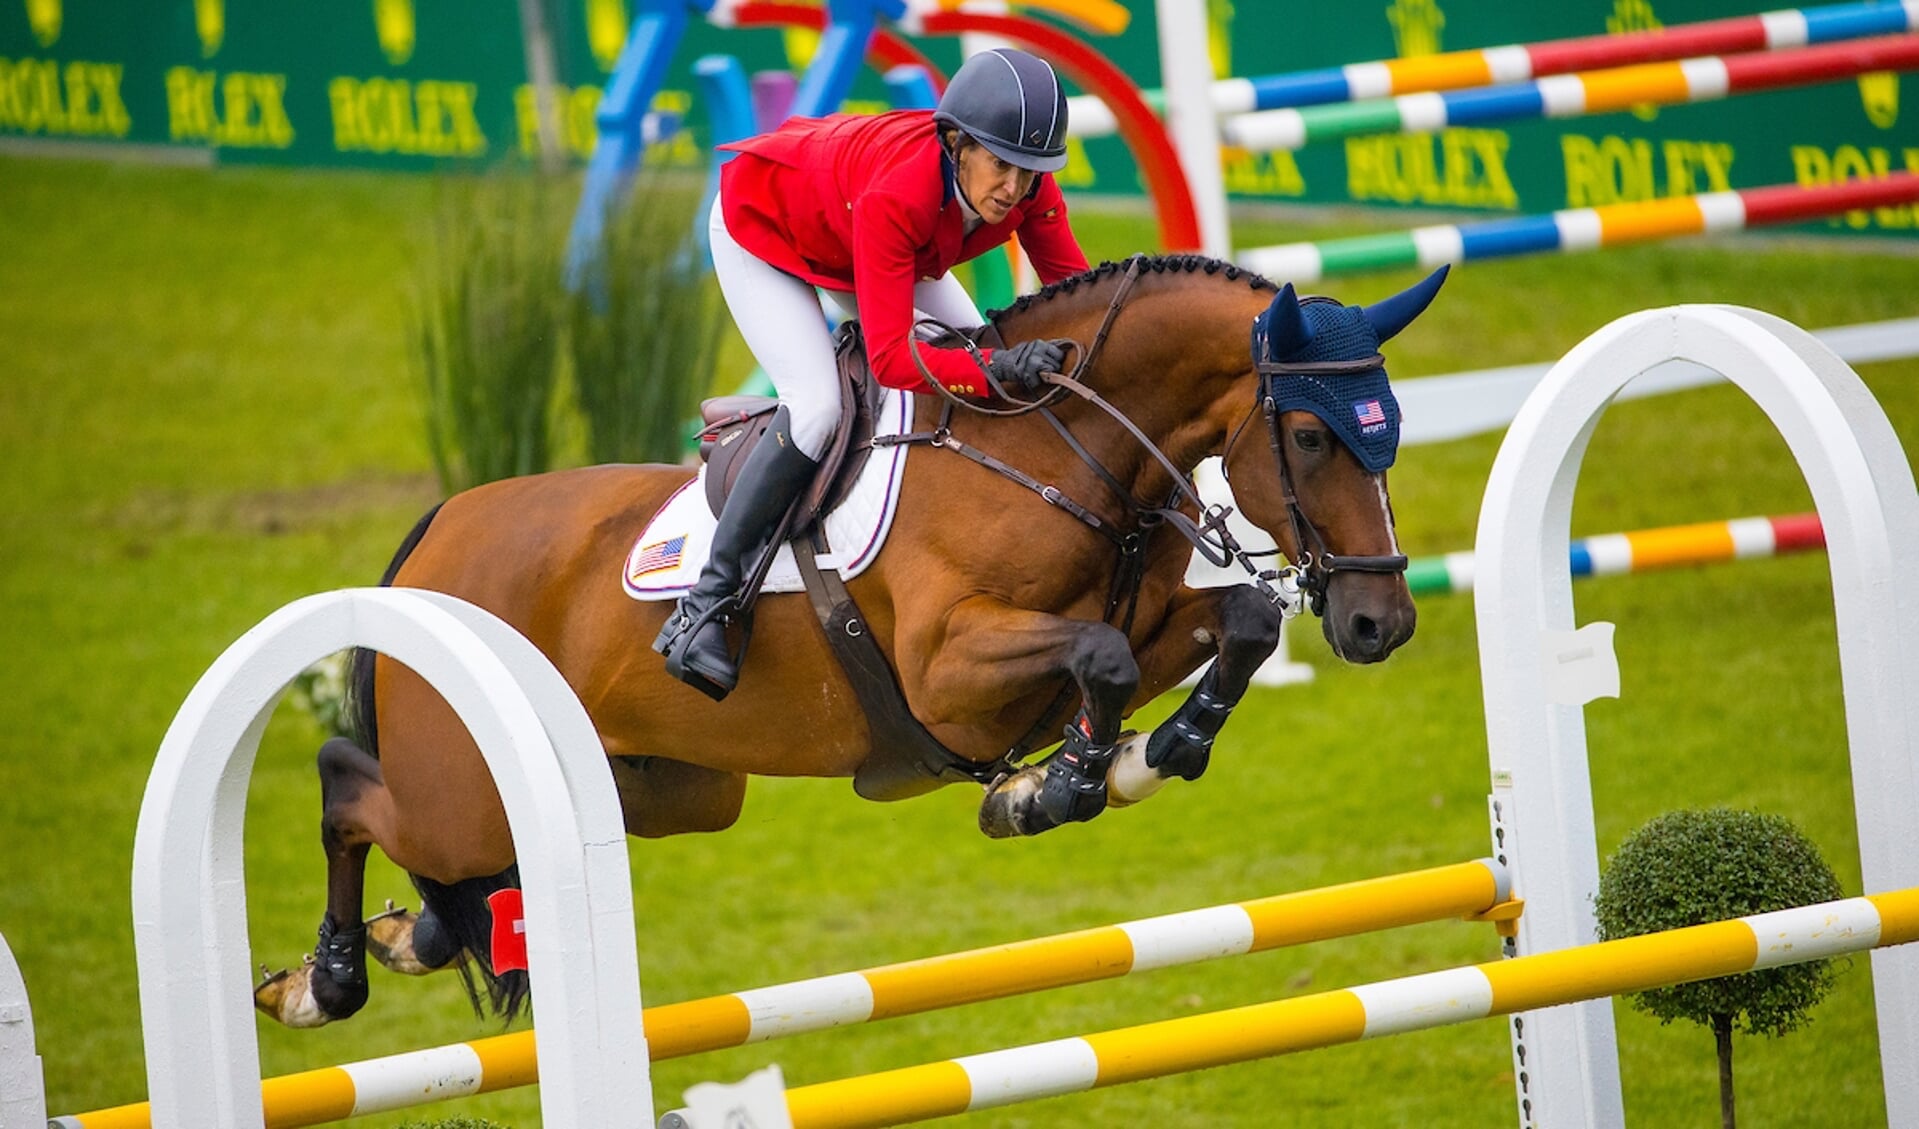 Laura Kraut - Goldwin
World Equestrian Festival CHIO Aachen 2021
© DigiShots